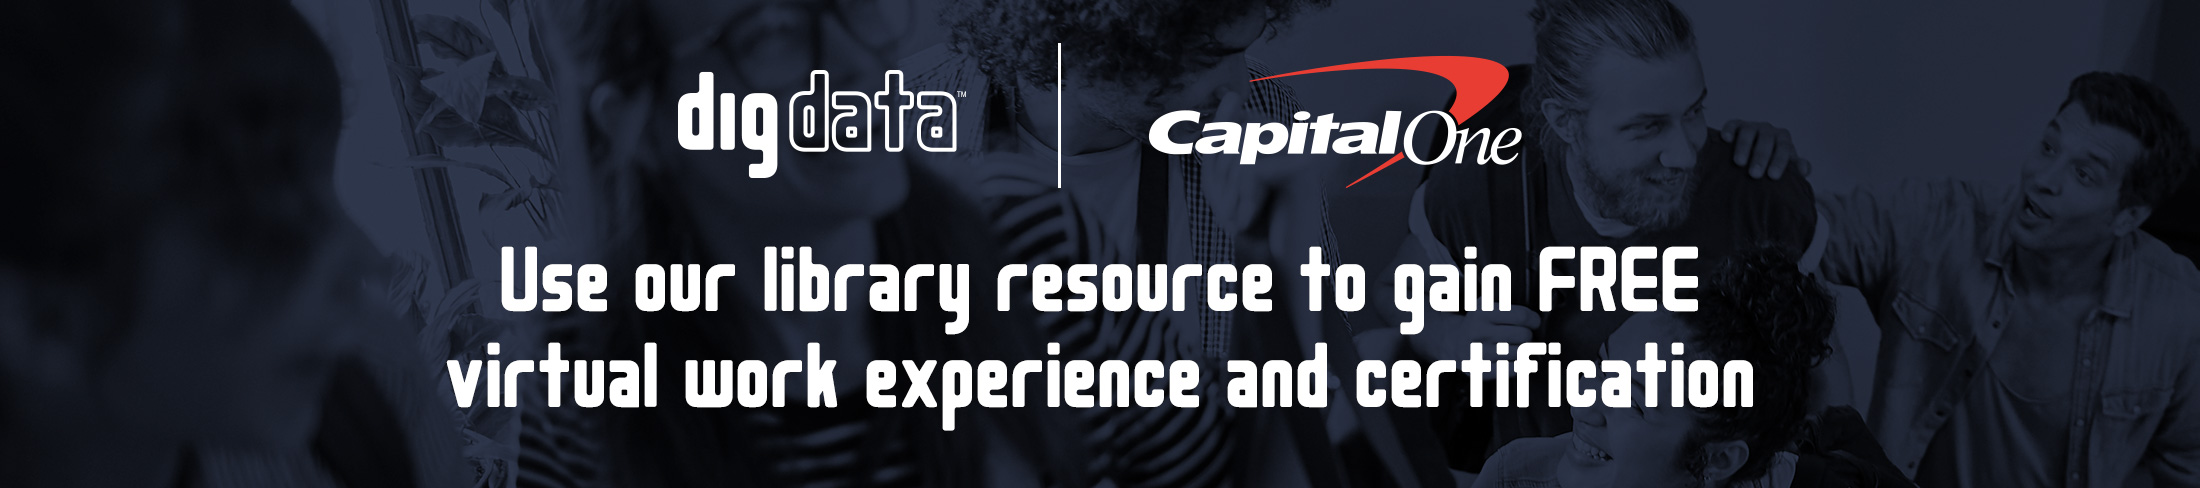 Digdata Capital One Career Challenge Banner